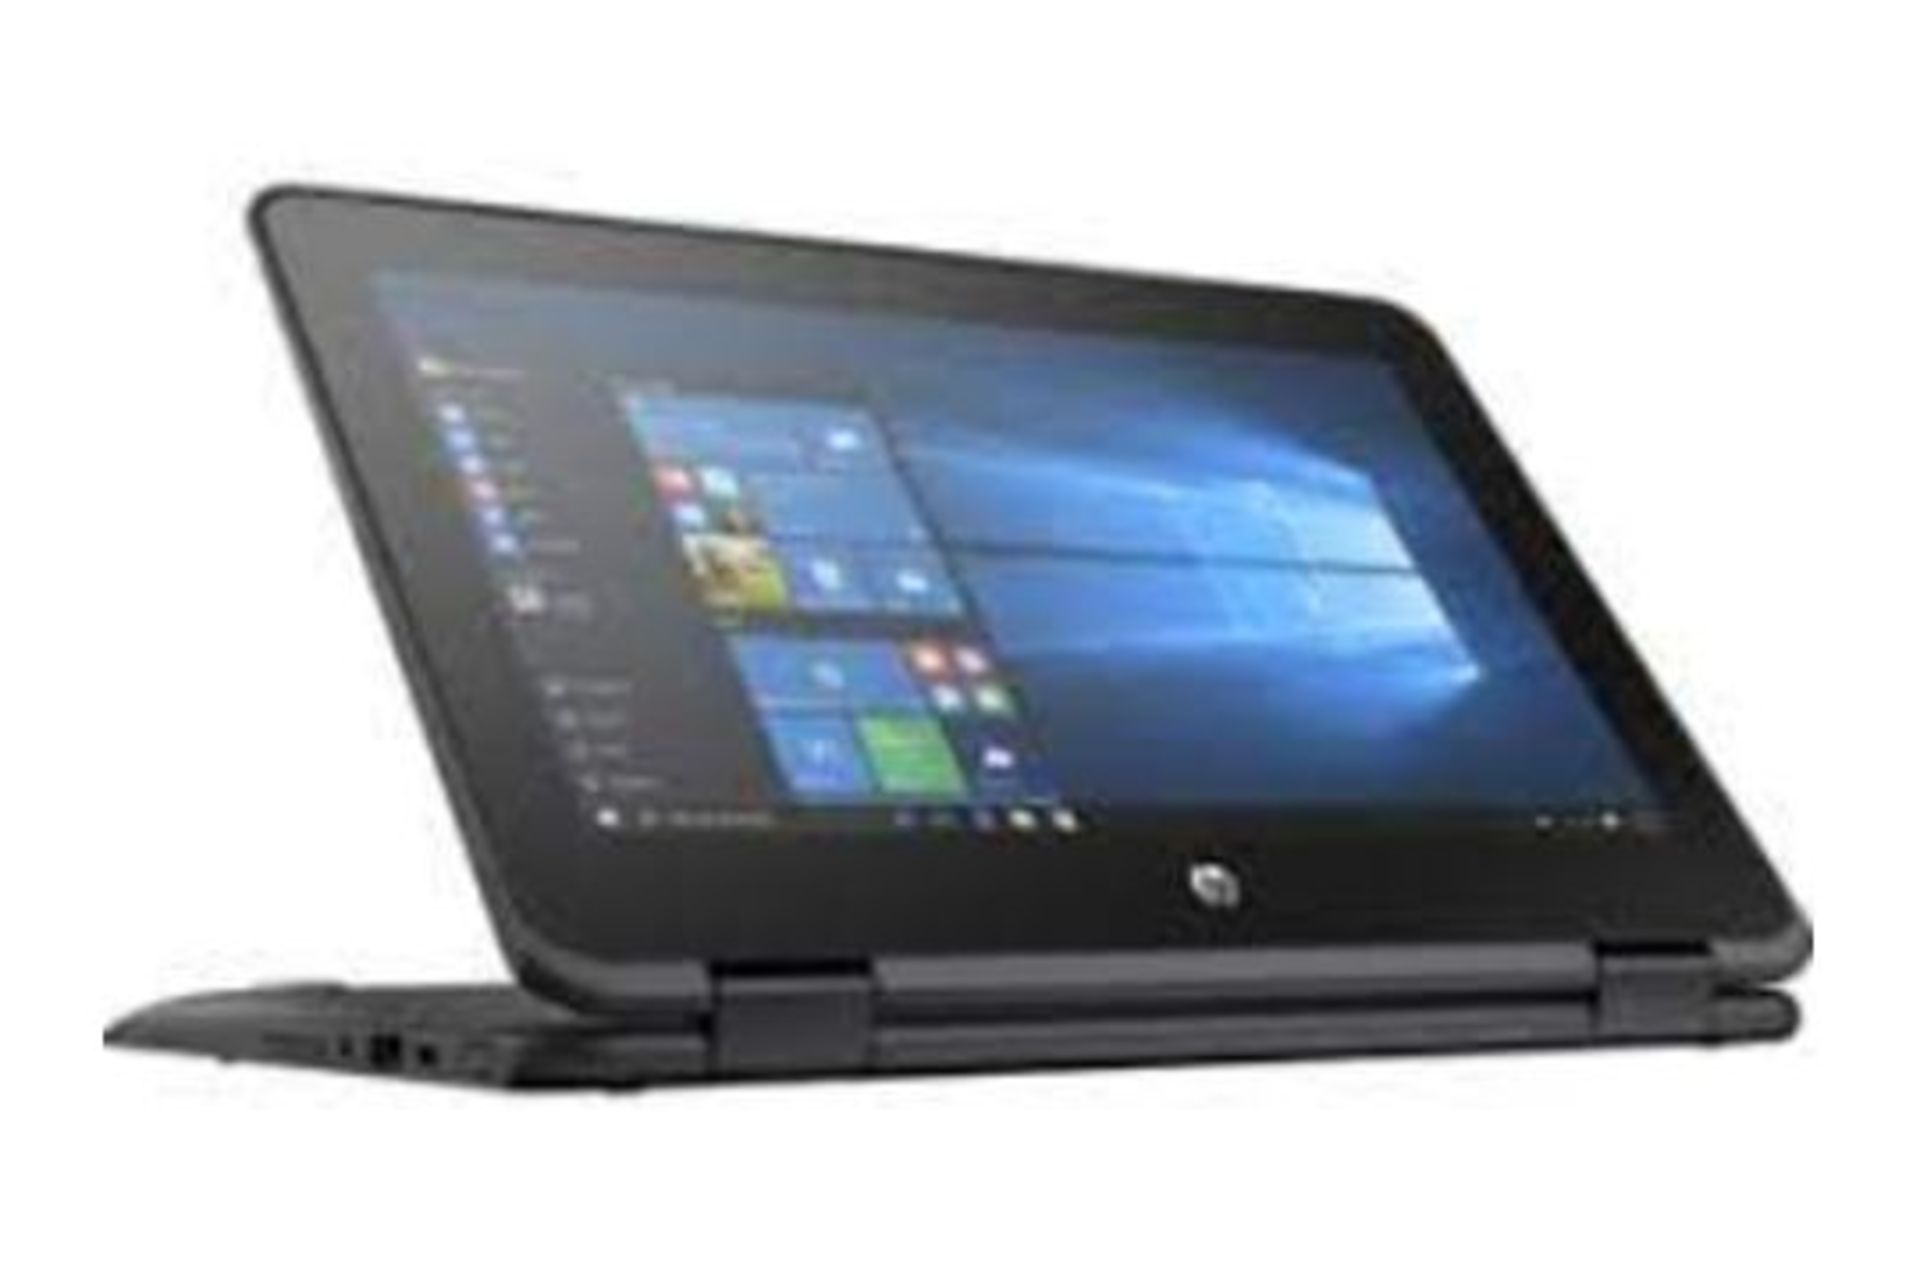 2 X HP ProBook x360 11 G1 EE 2 IN 1 Laptops (Pentium Quad Core/4 GB/128 GB SSD) RRP £450 EACH. - Image 3 of 3